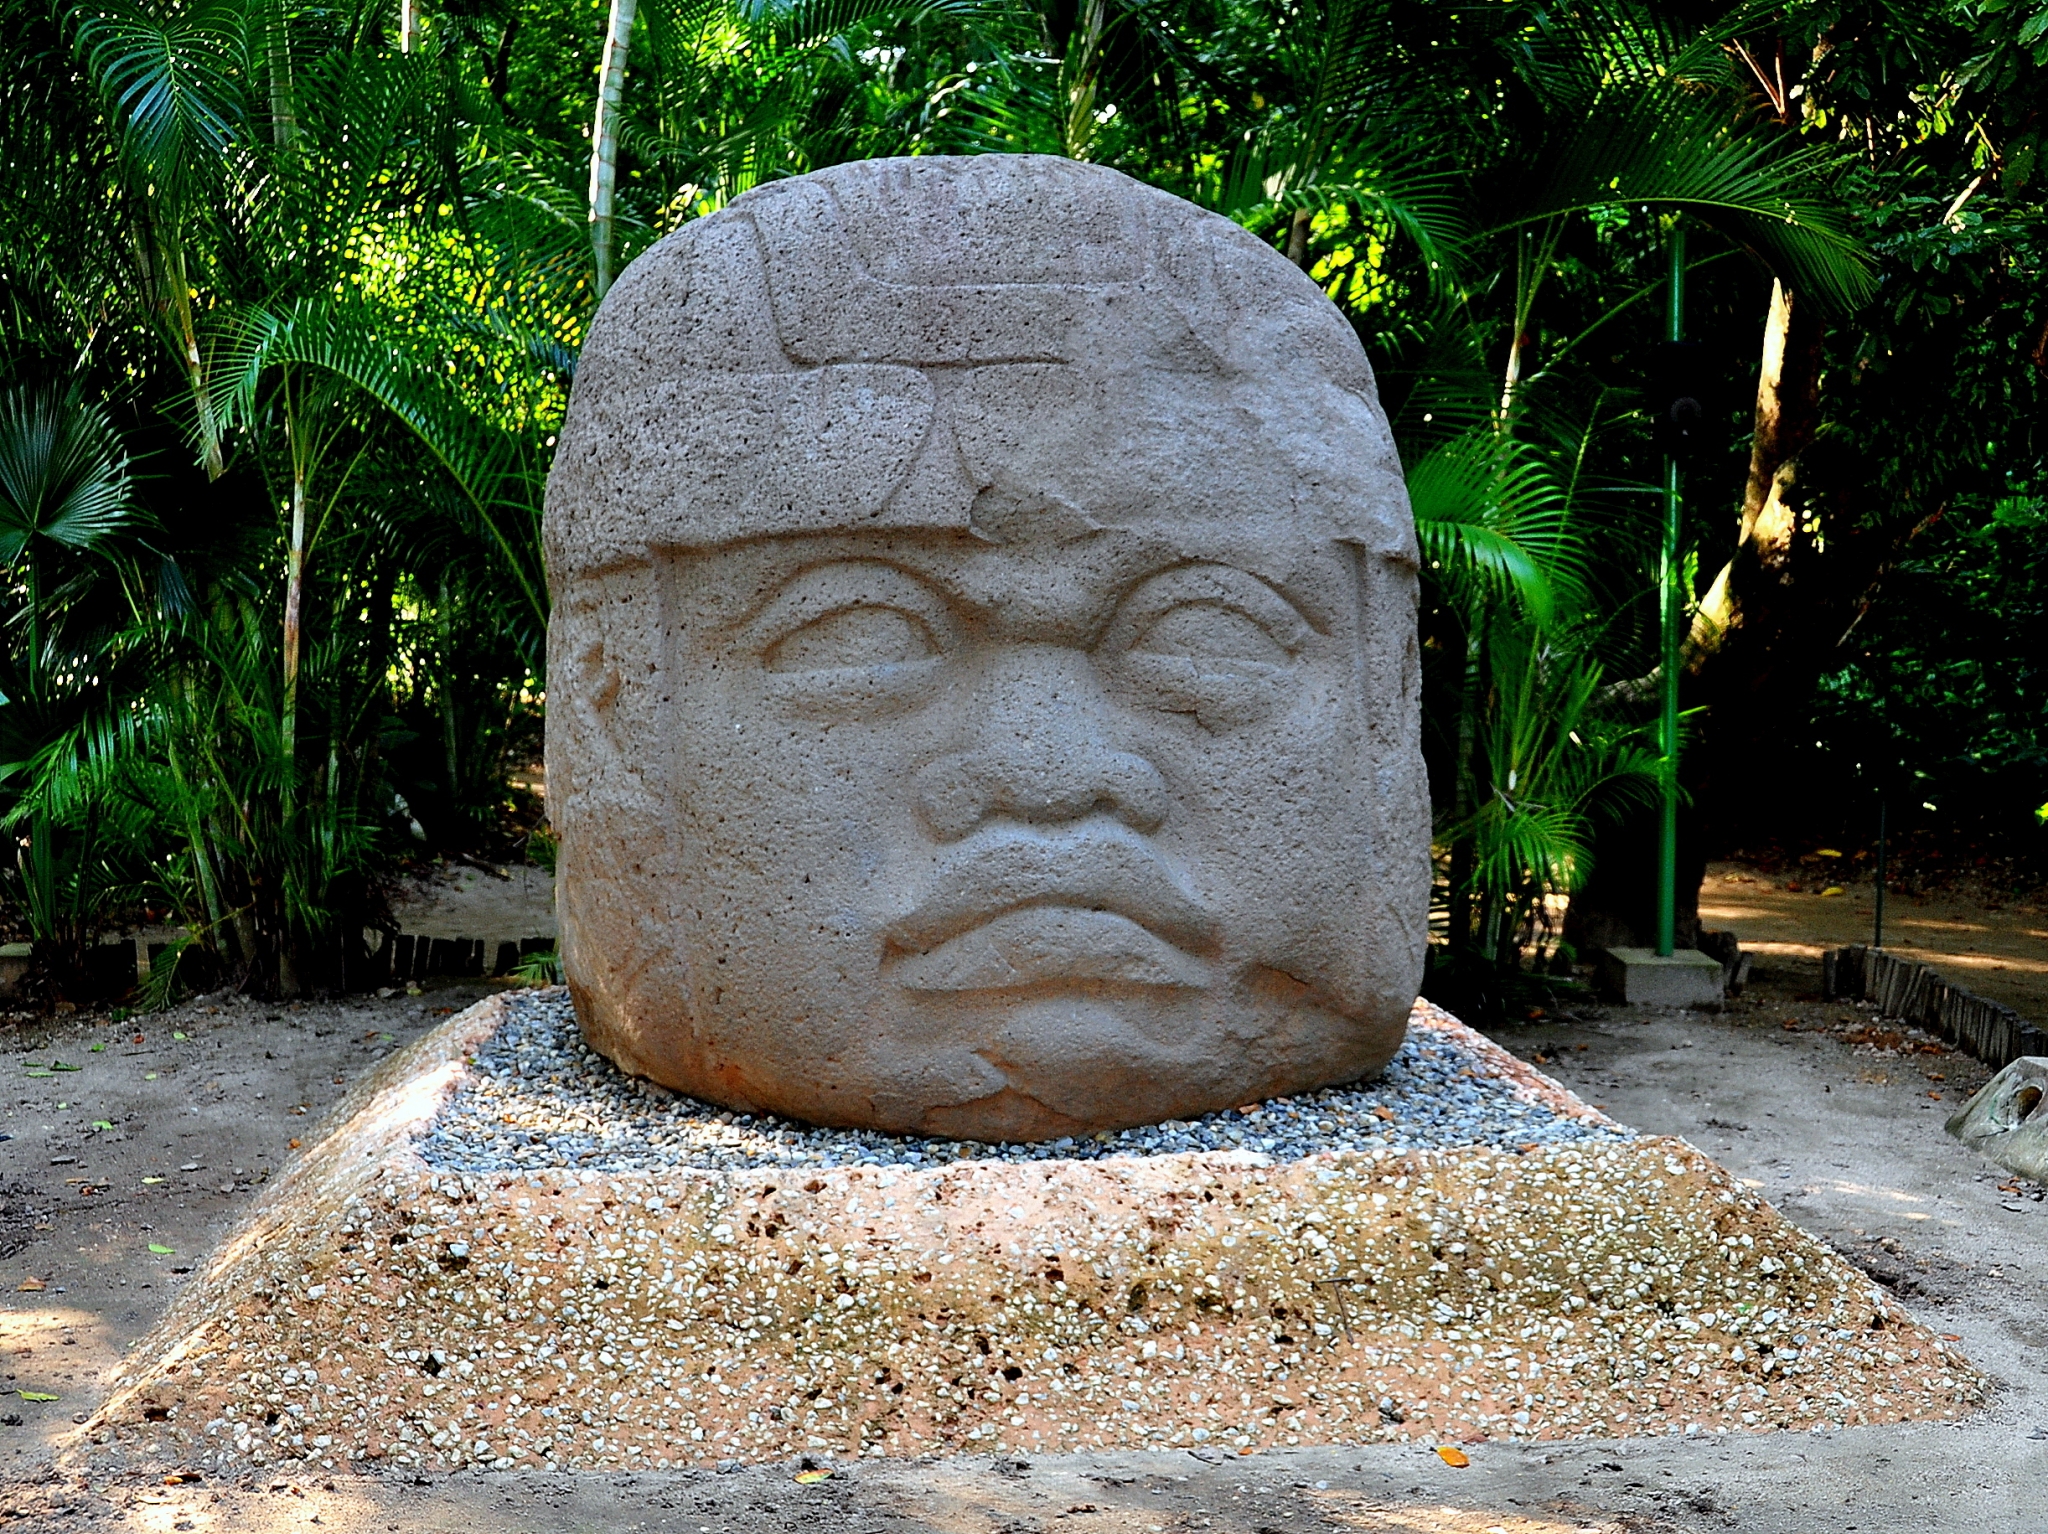 olmec colossal head made from basalt